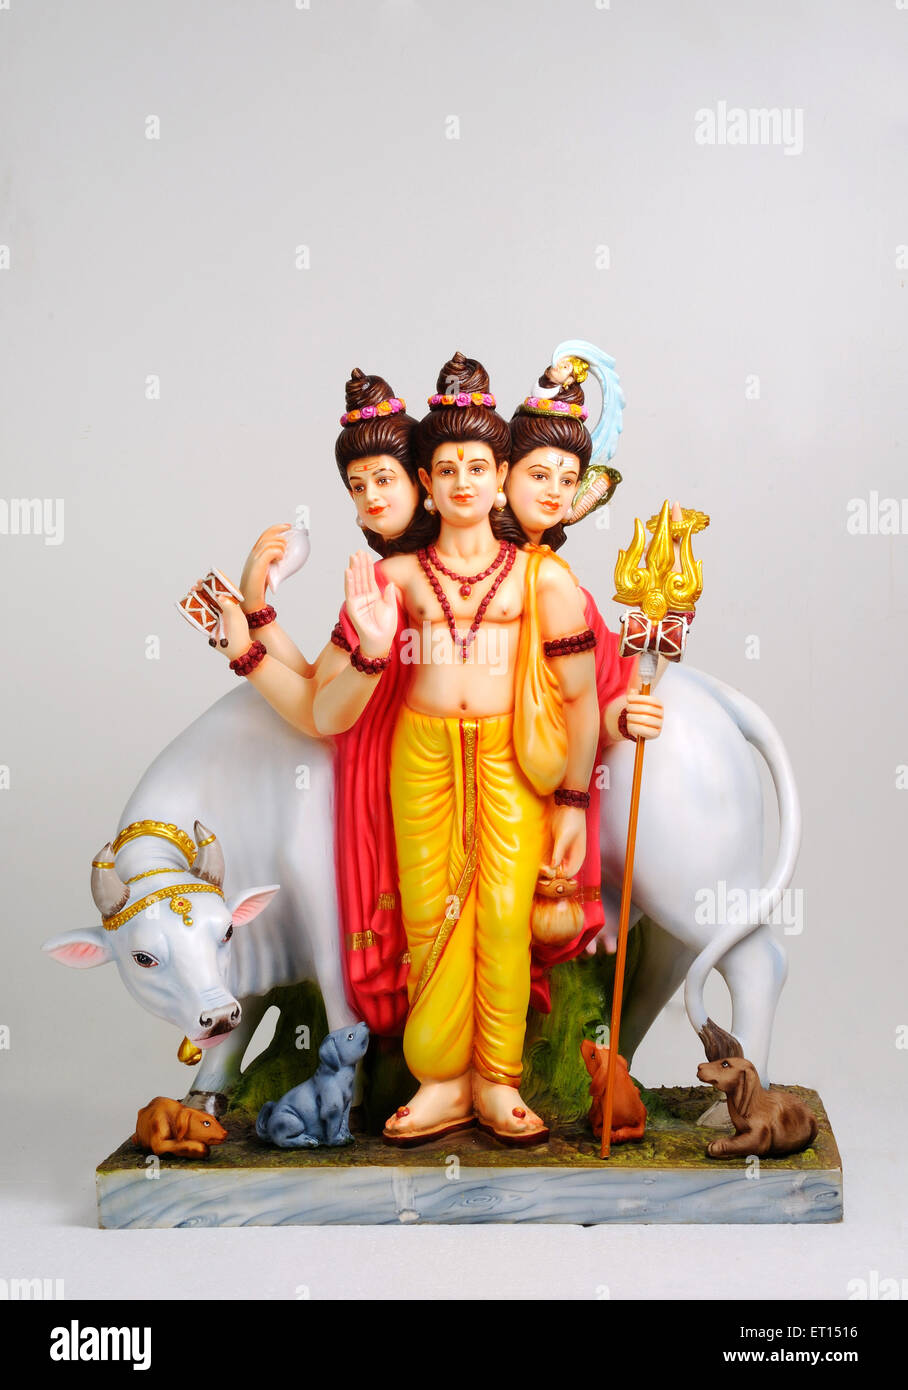 Three face God Shri Gurudev Datta Dattatreya Dattaguru with cow and dogs clay statue sculpture Lord Brahma Vishnu and Shiva in one single form India Stock Photo